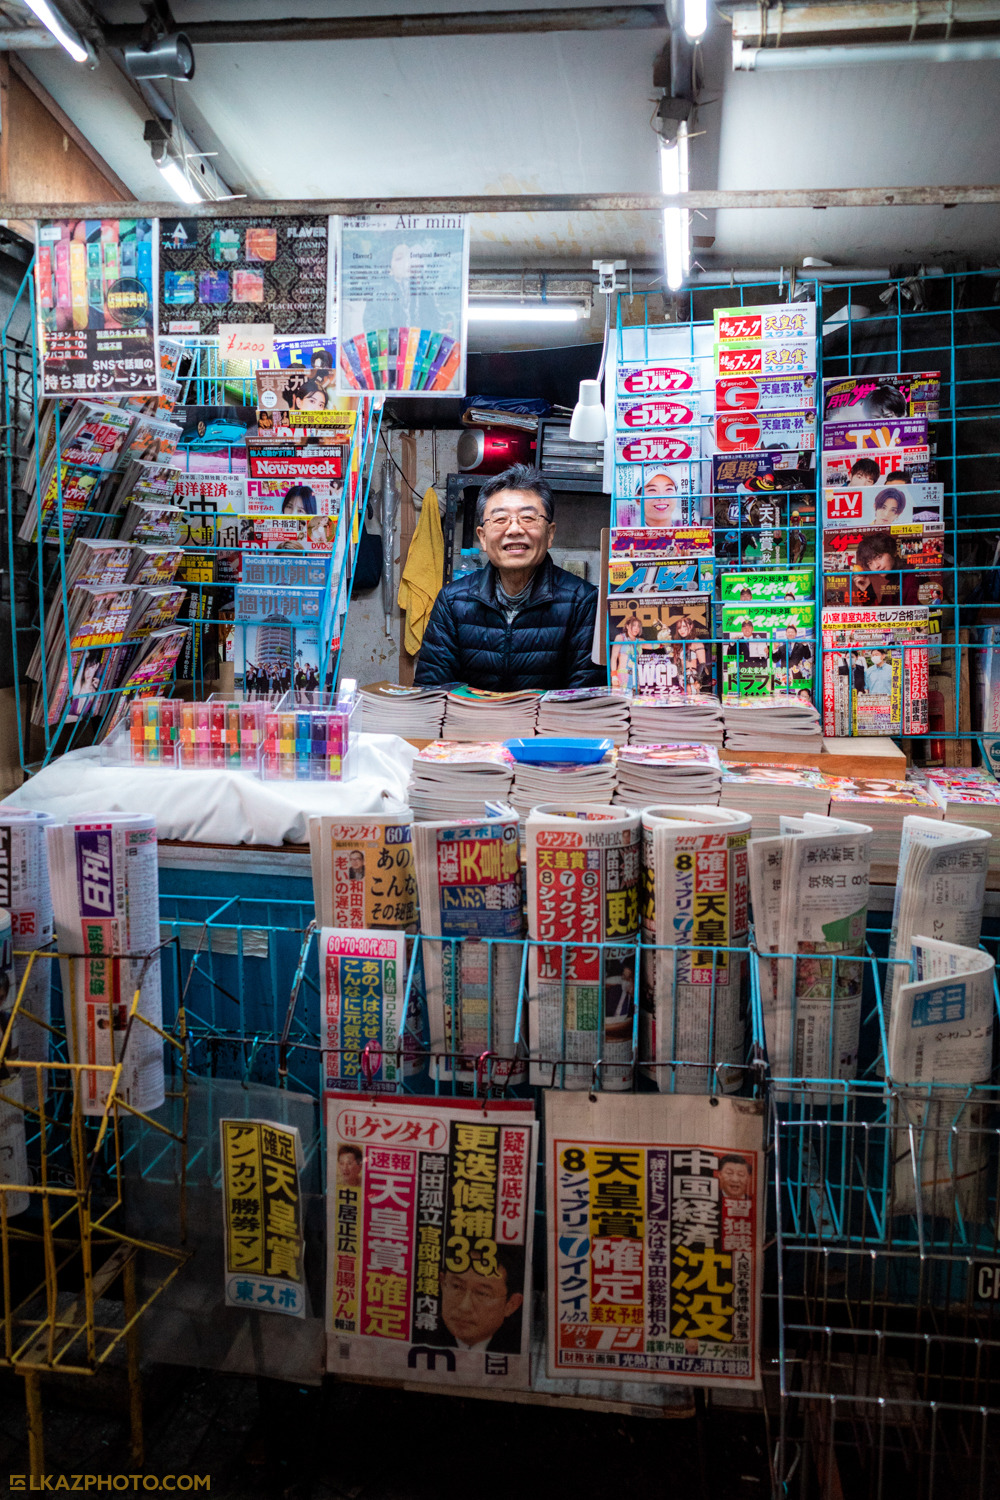 tokyostreetphoto:
“The Last Newsstand II, Shibuya 渋谷
”